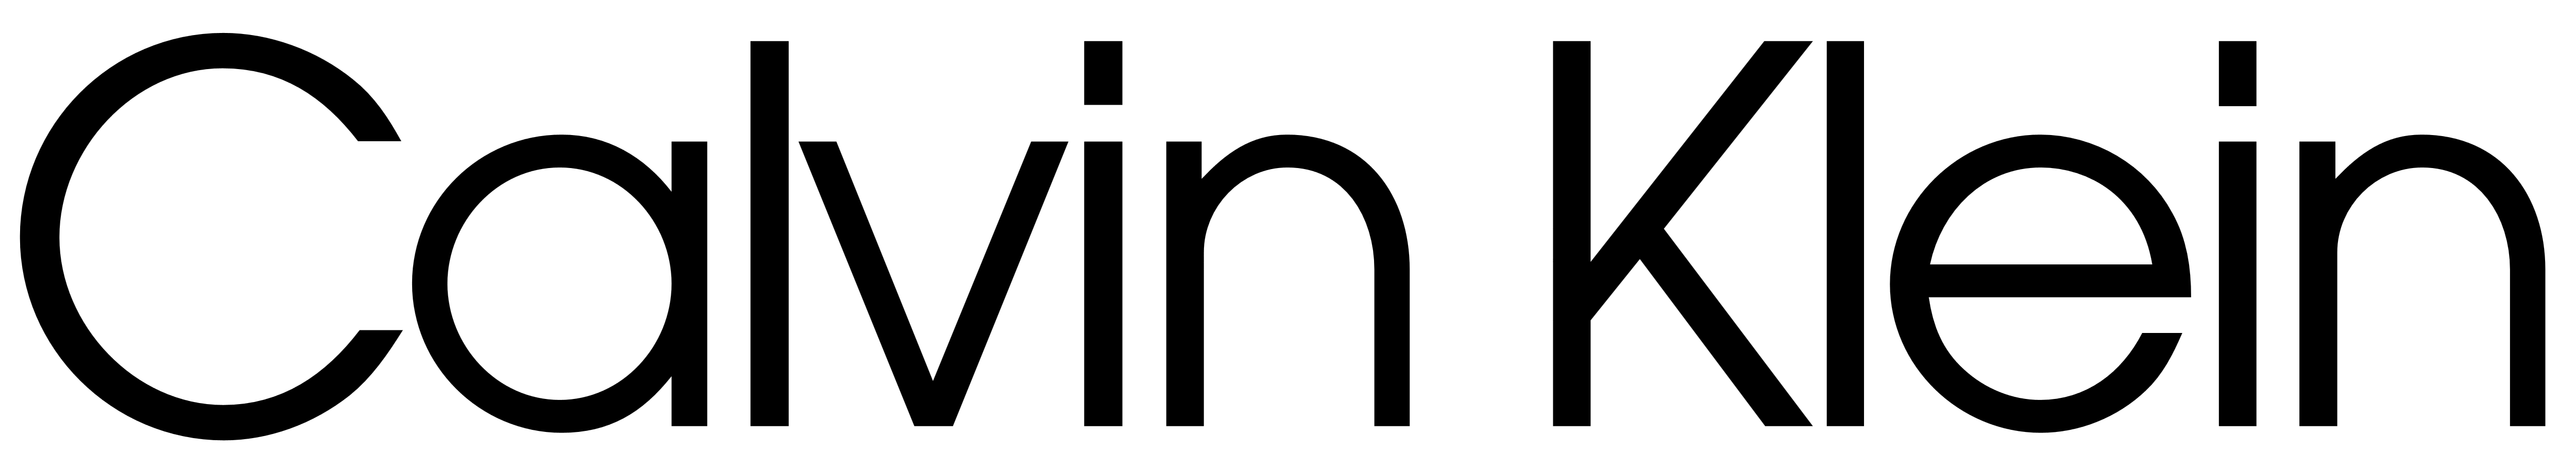 Calvin Klein Logo PNG Gambar berkualitas tinggi